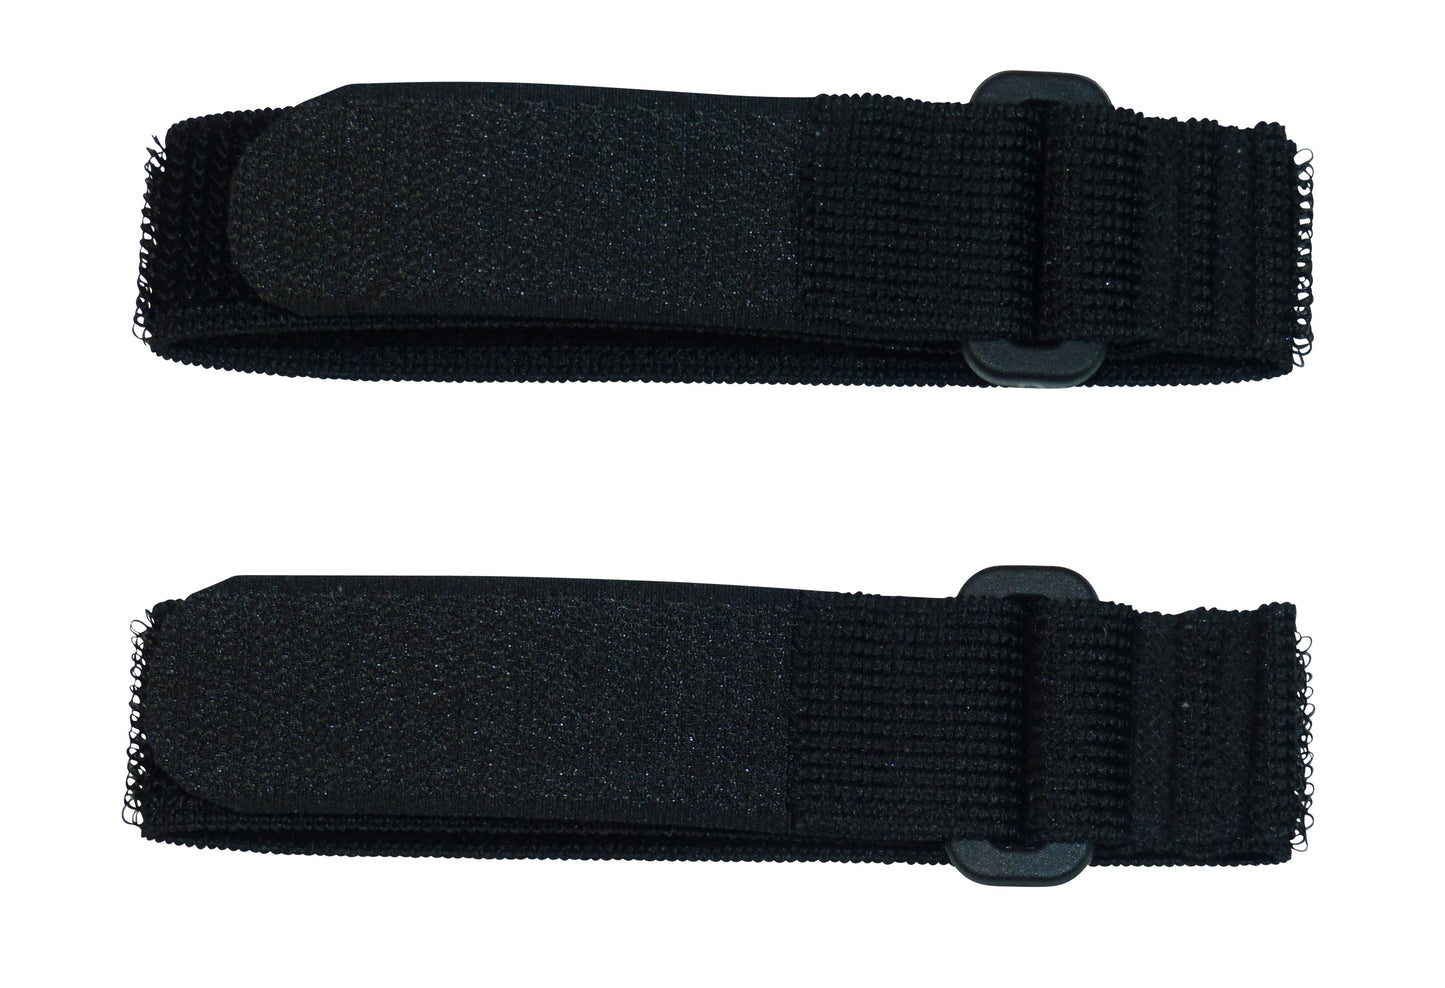 Benristraps 25mm Elastic Hook and Loop Cinch Strap in Black, Pack of Two (4)